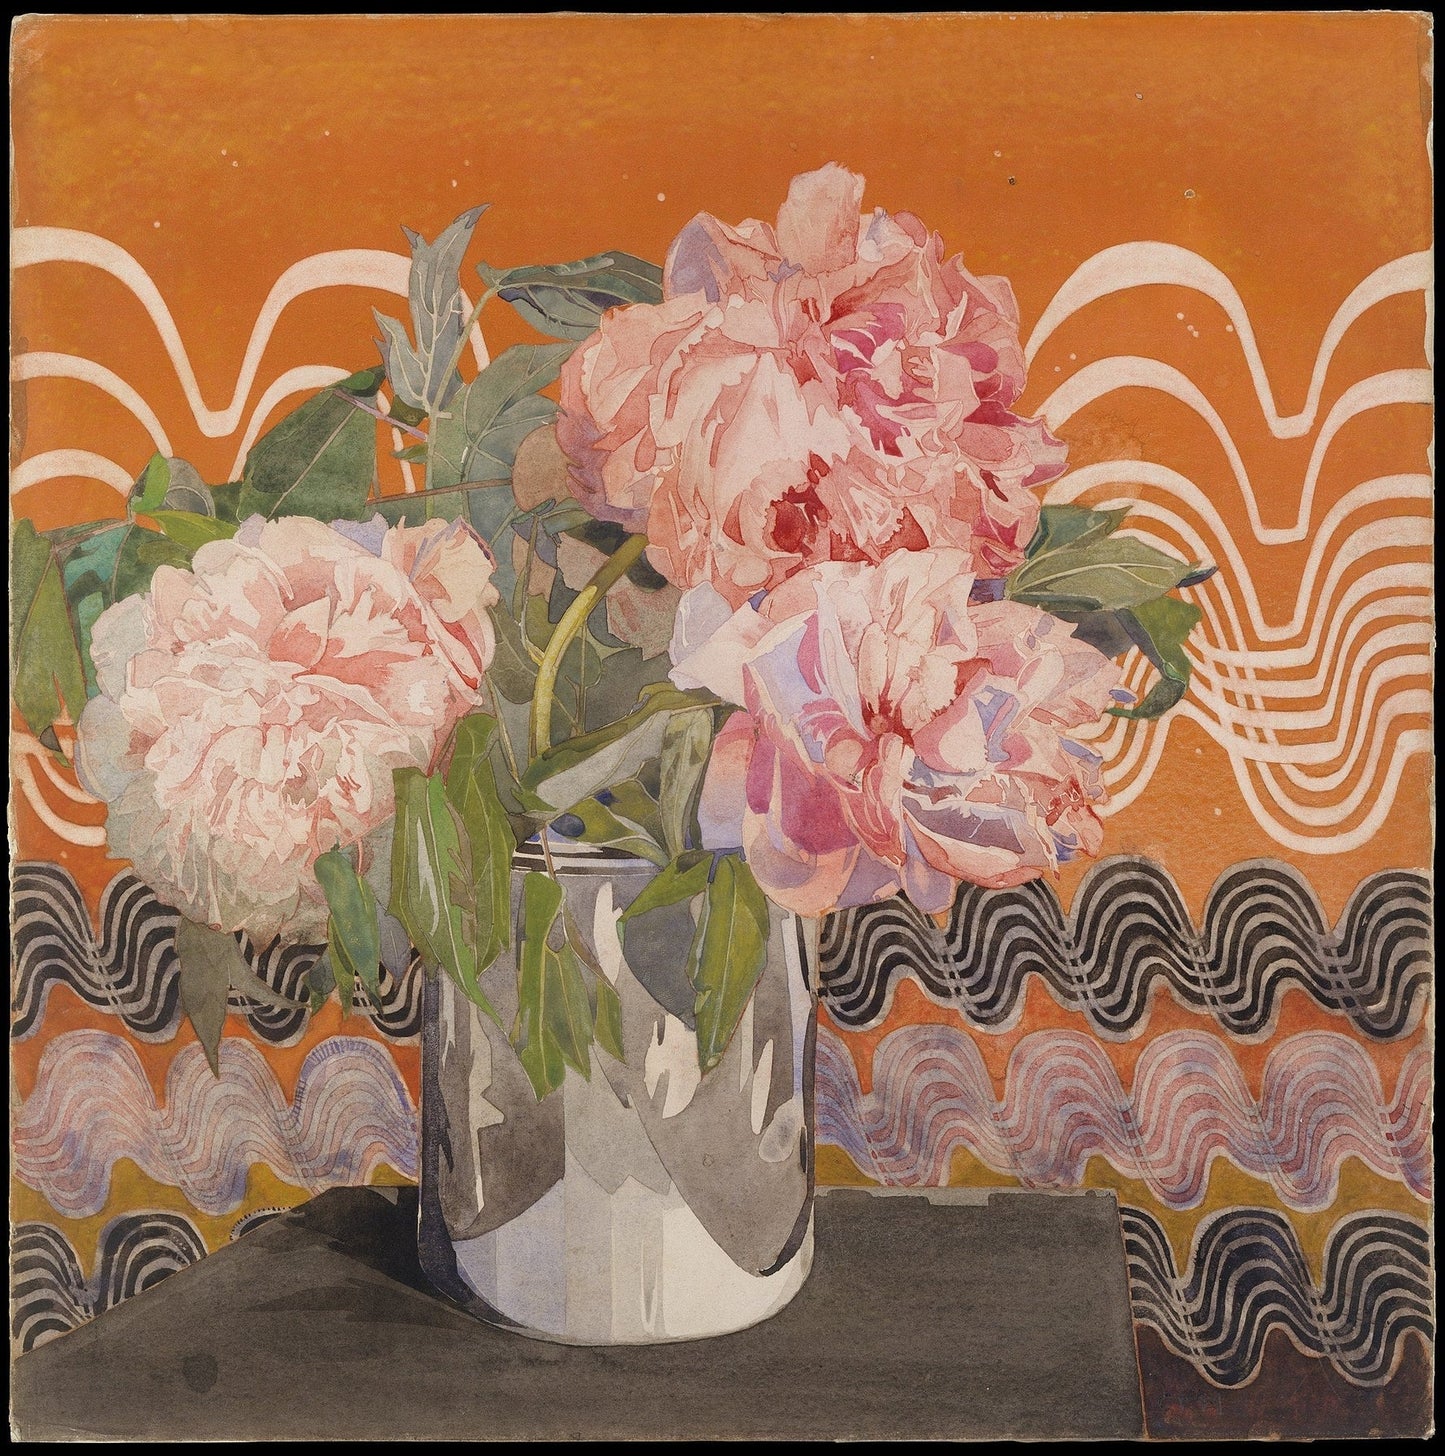 Peonies (1920s) | Charles Rennie Mackintosh prints Posters, Prints, & Visual Artwork The Trumpet Shop   